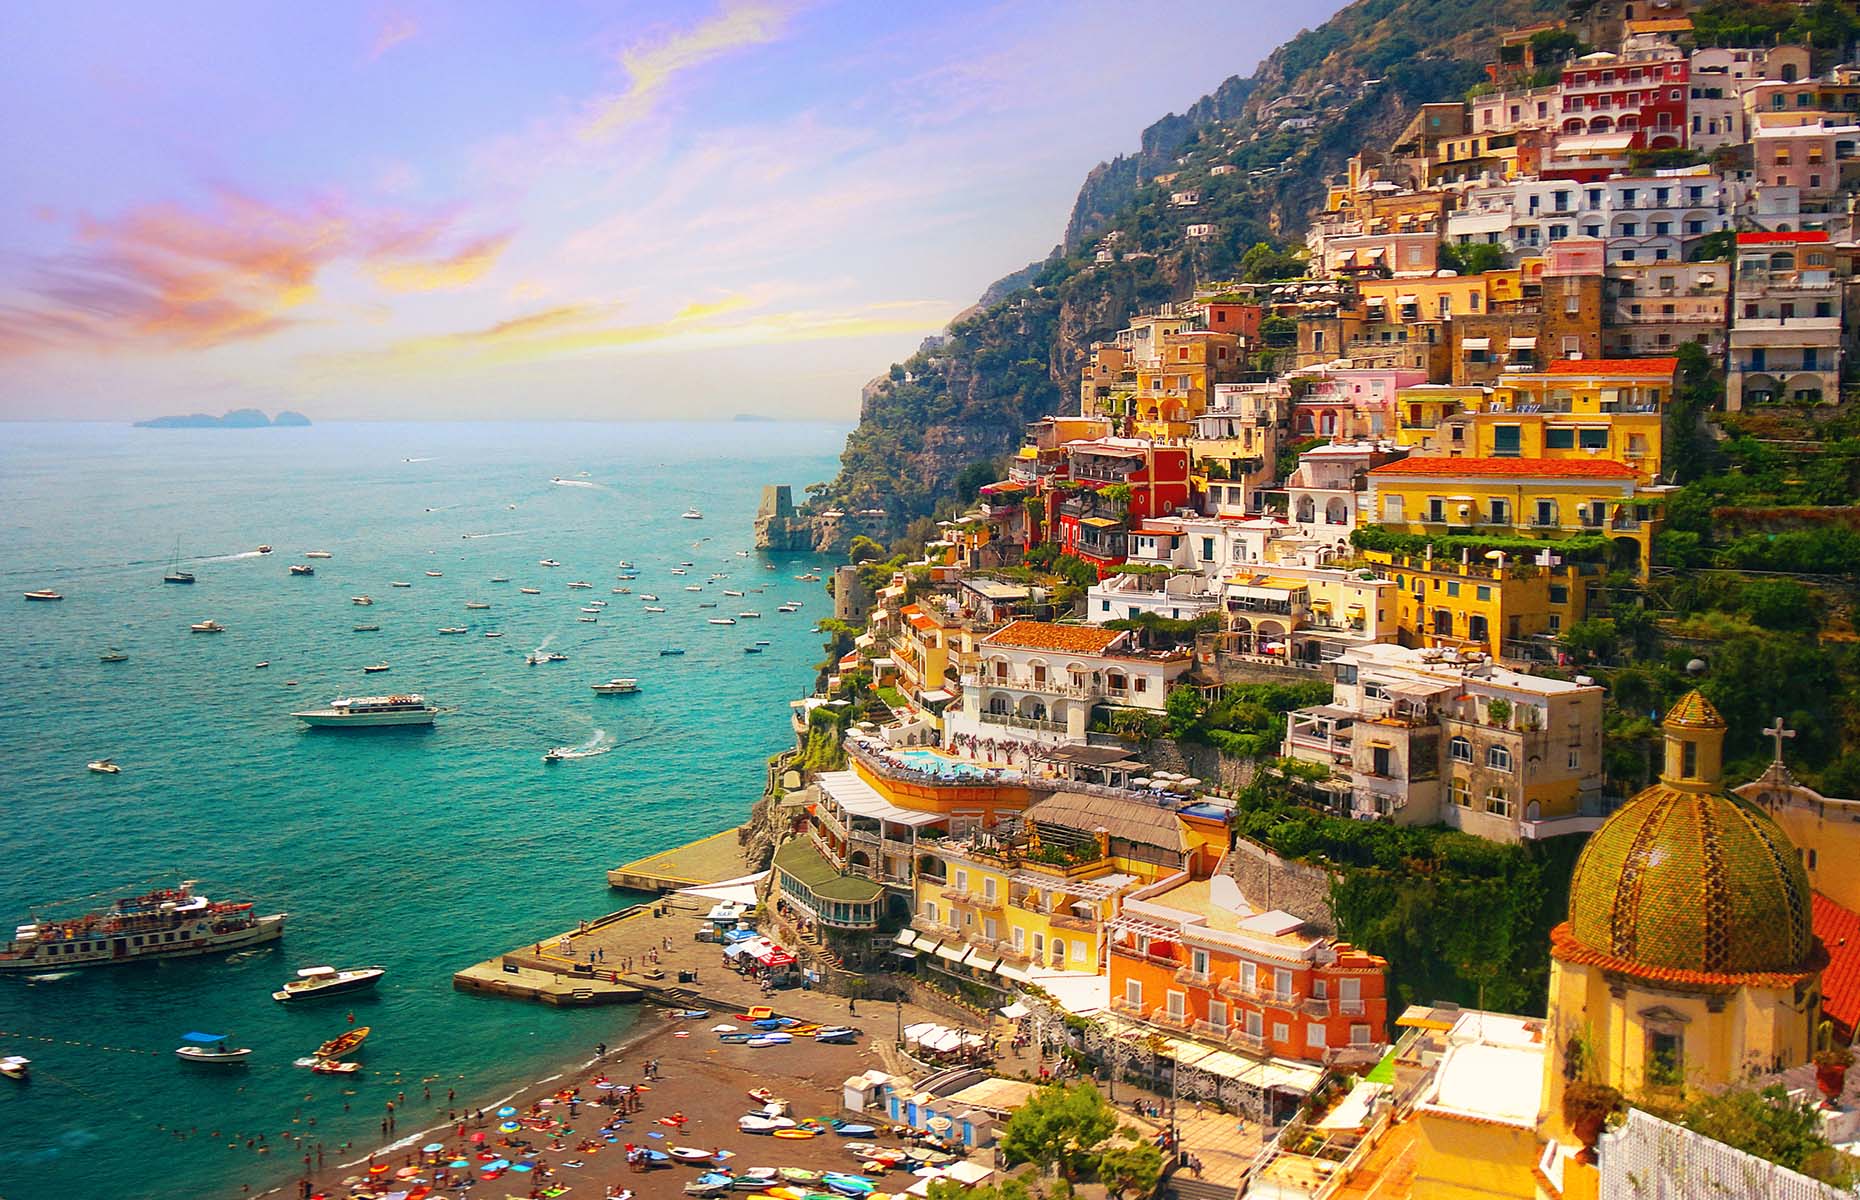 Positano on the Amalfi Coast (Image: Lina Harb/Shutterstock)